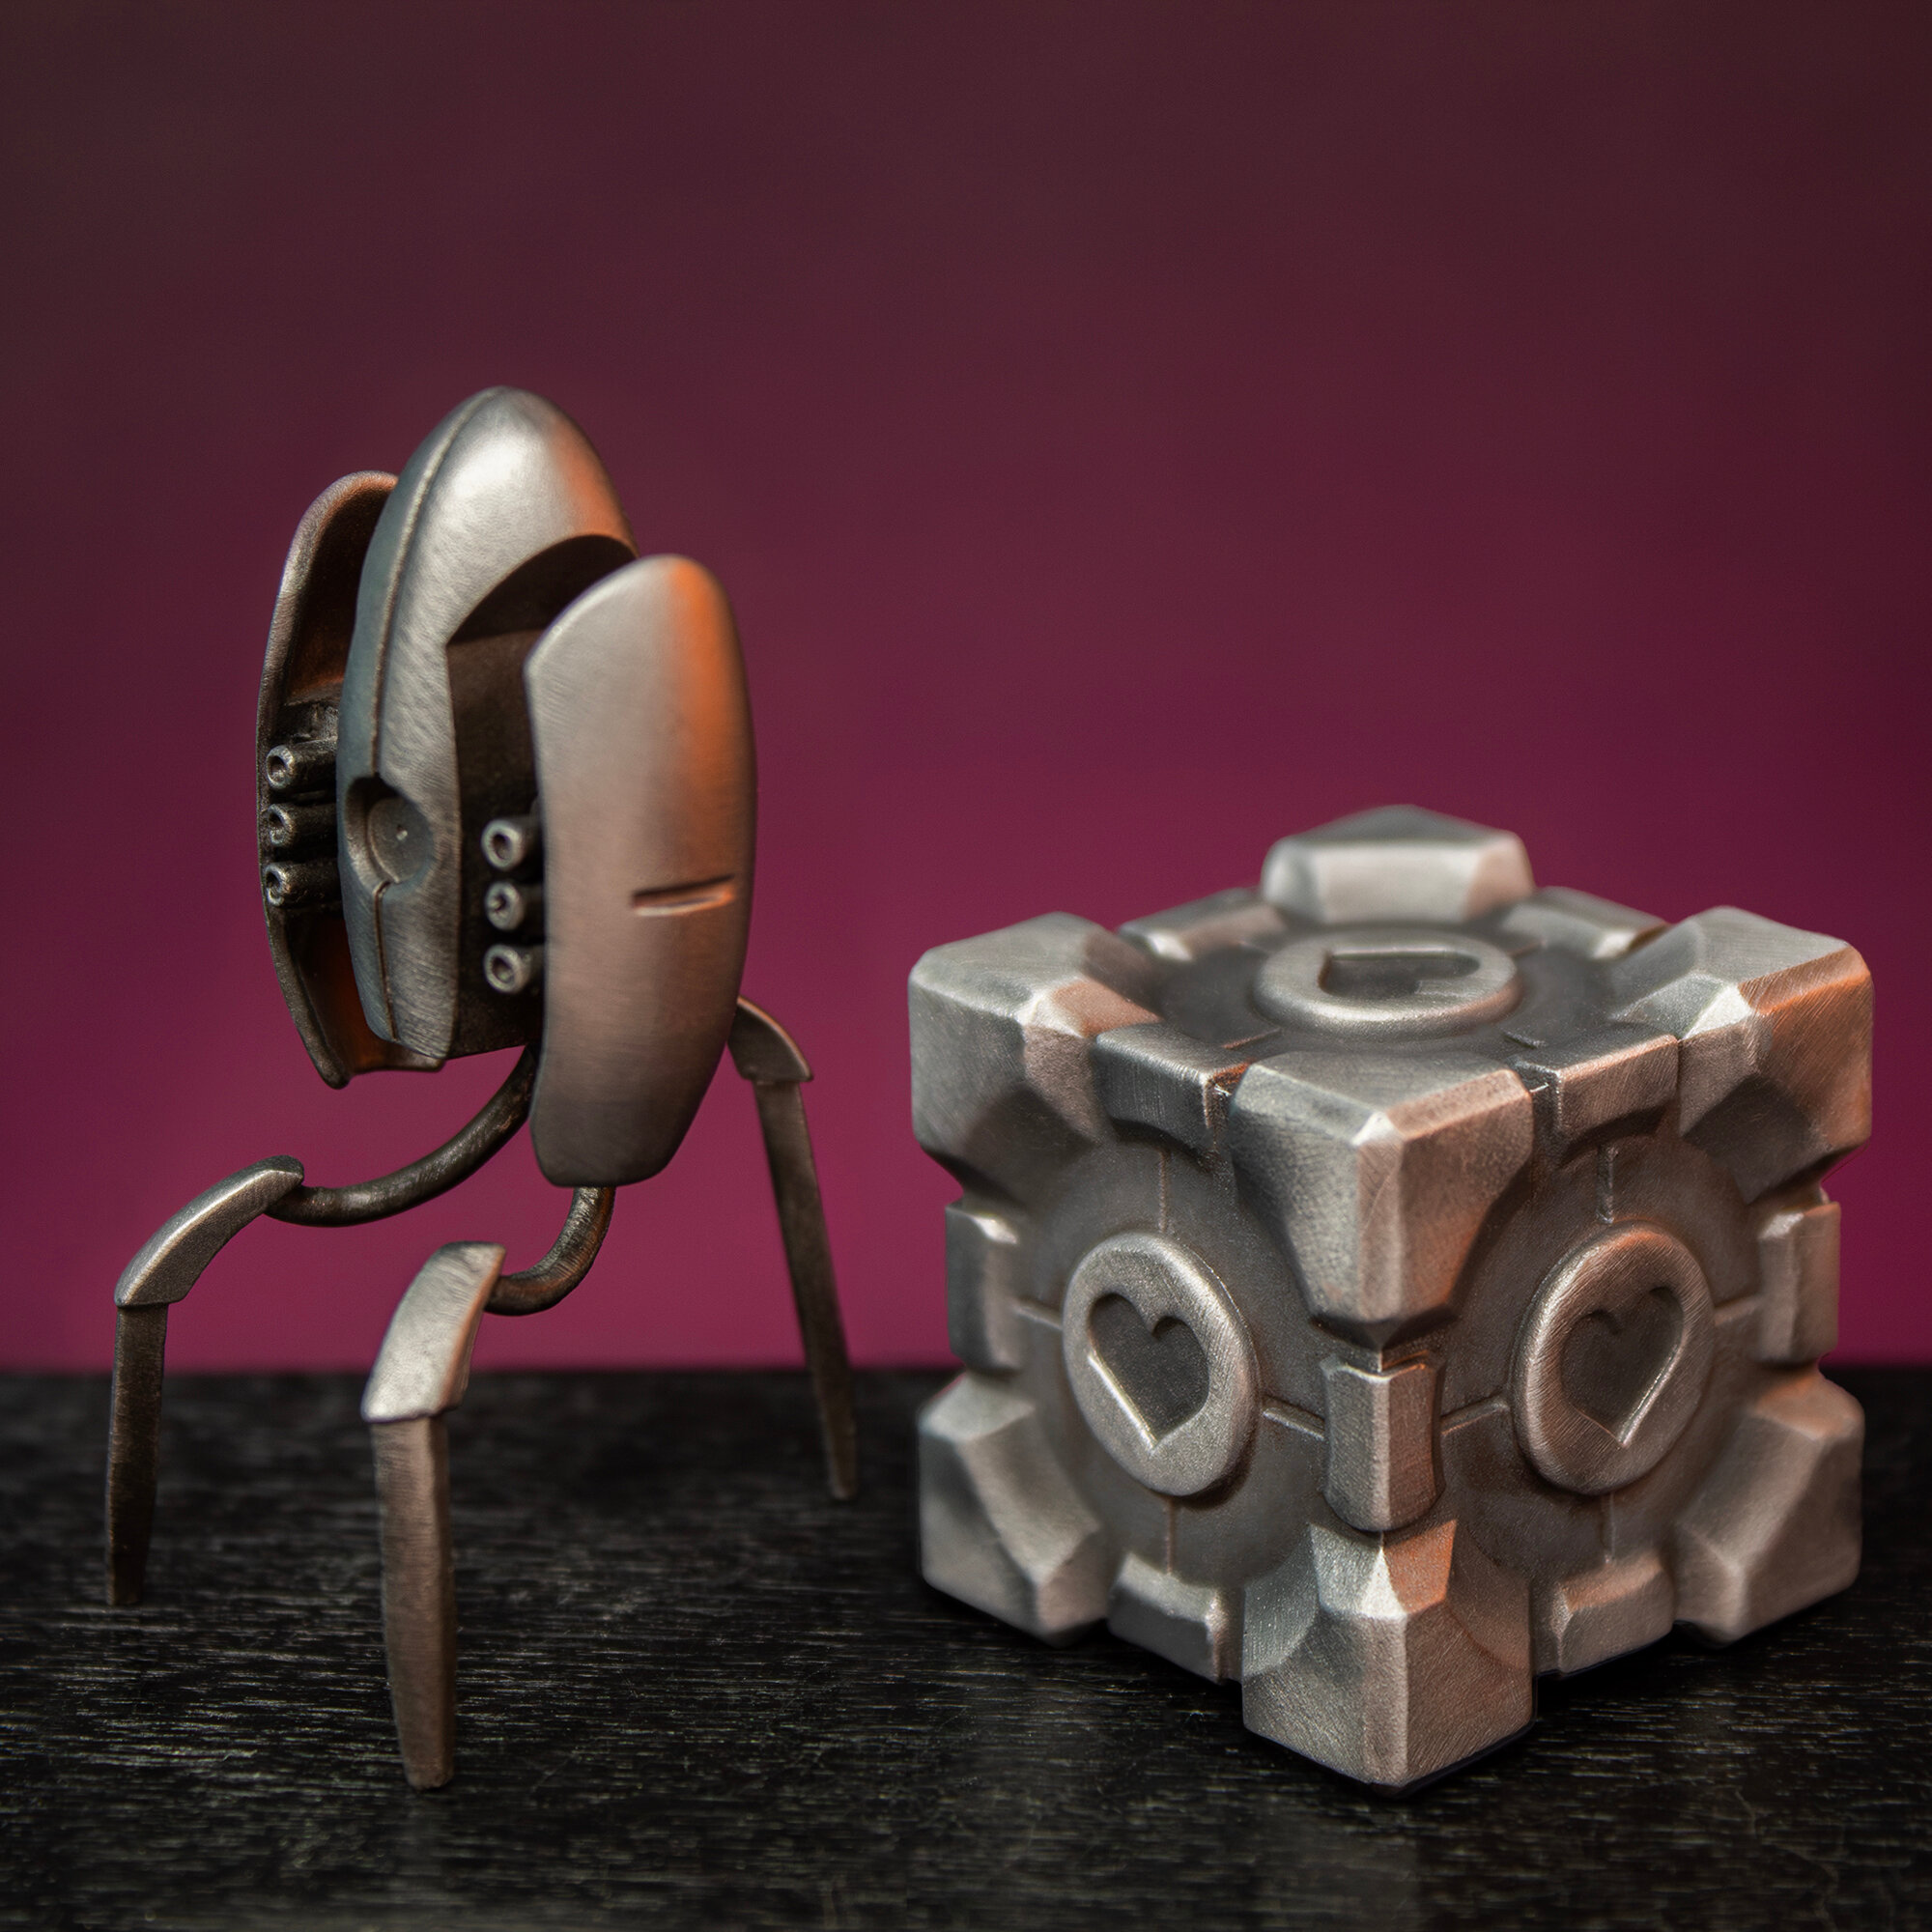 Куб Компаньон Aperture Science металлическая коллекционная фигурка Портал Халф Лайф / Companion Cube Portal Half-Life Valve